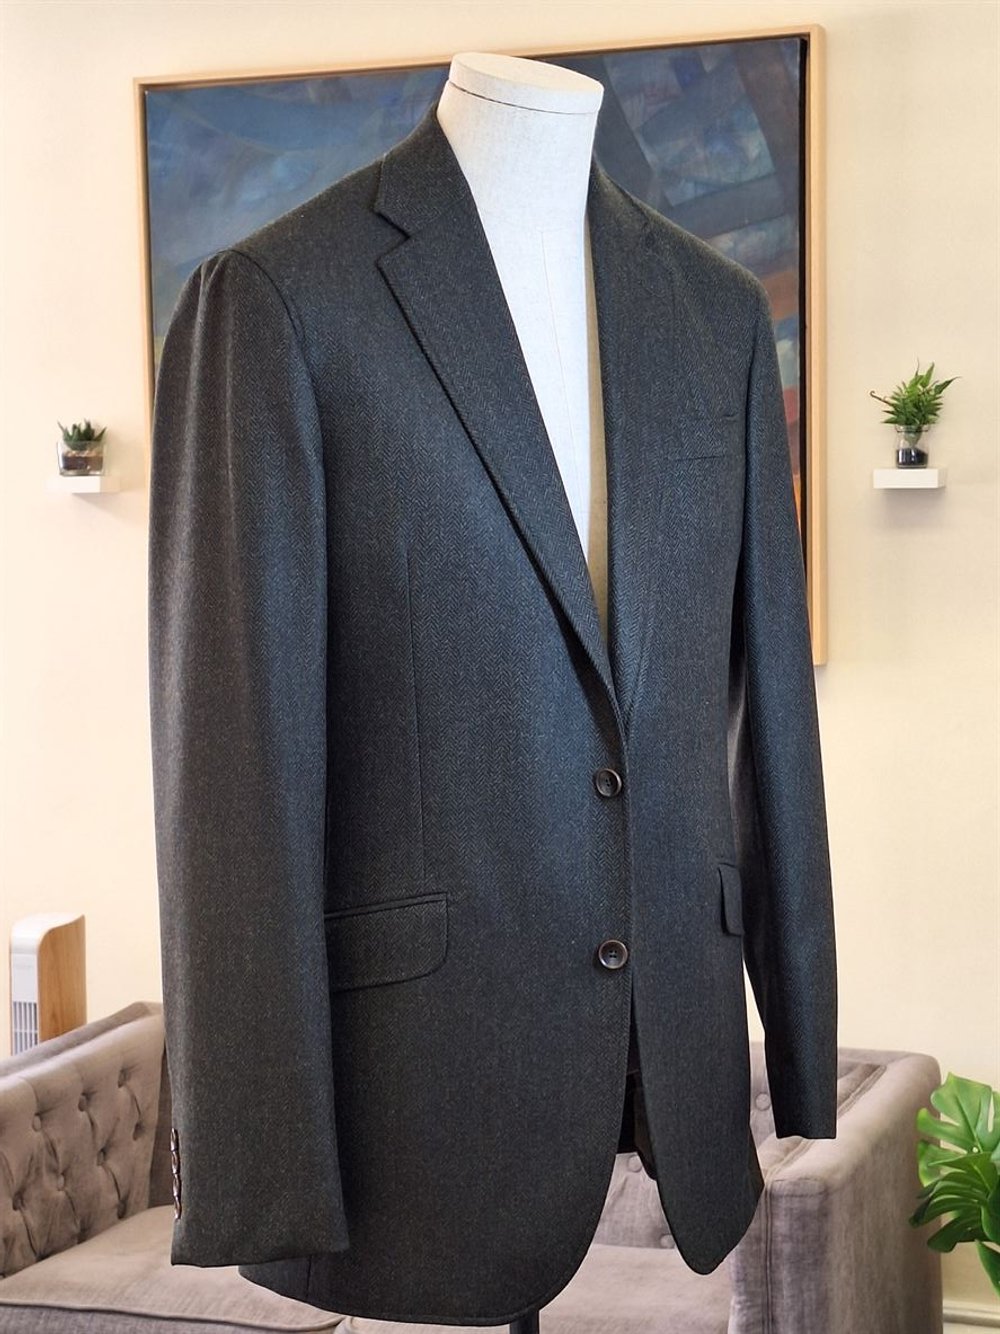 Men's Bespoke & Tailored Suits in Lichfield